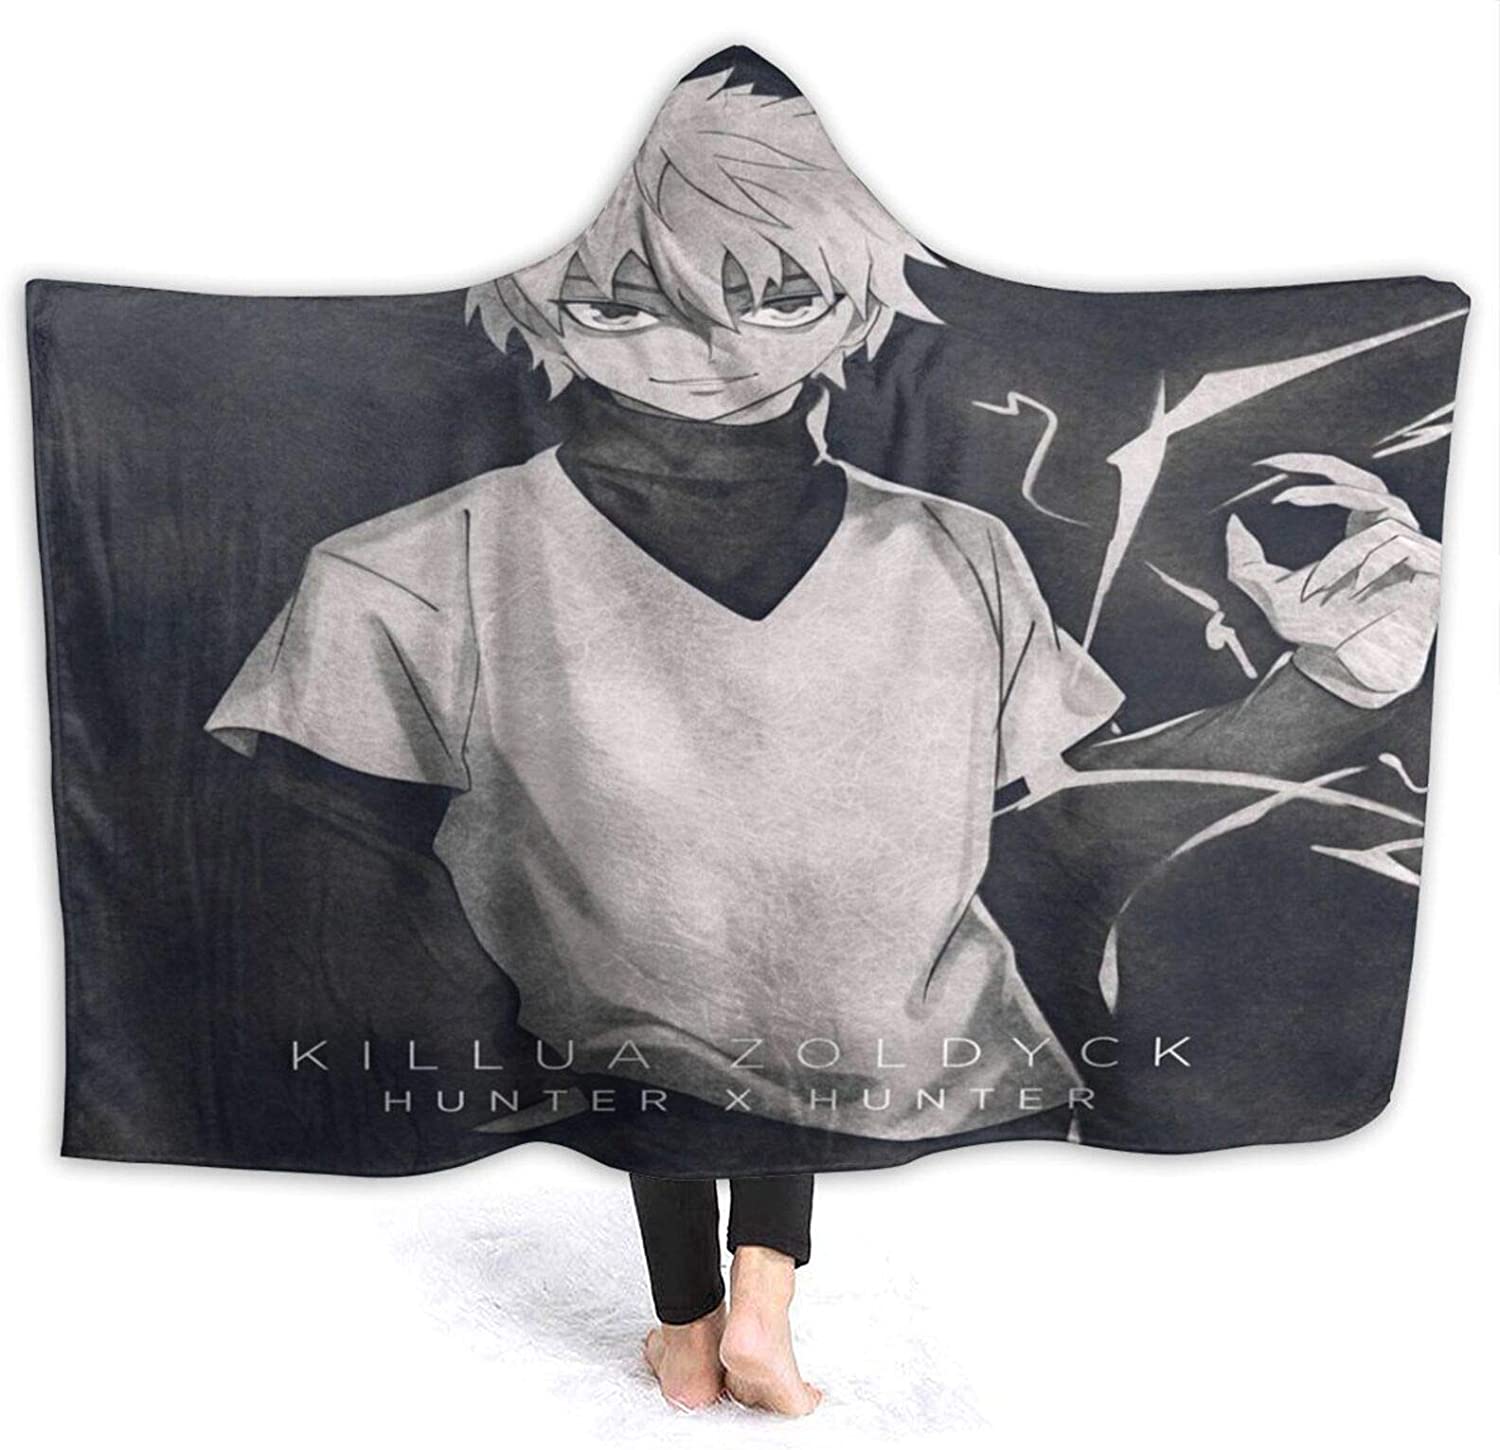 H-unter X H-unter Manga HXH Killua Zoldyck 3D Printed Hooded Blanket